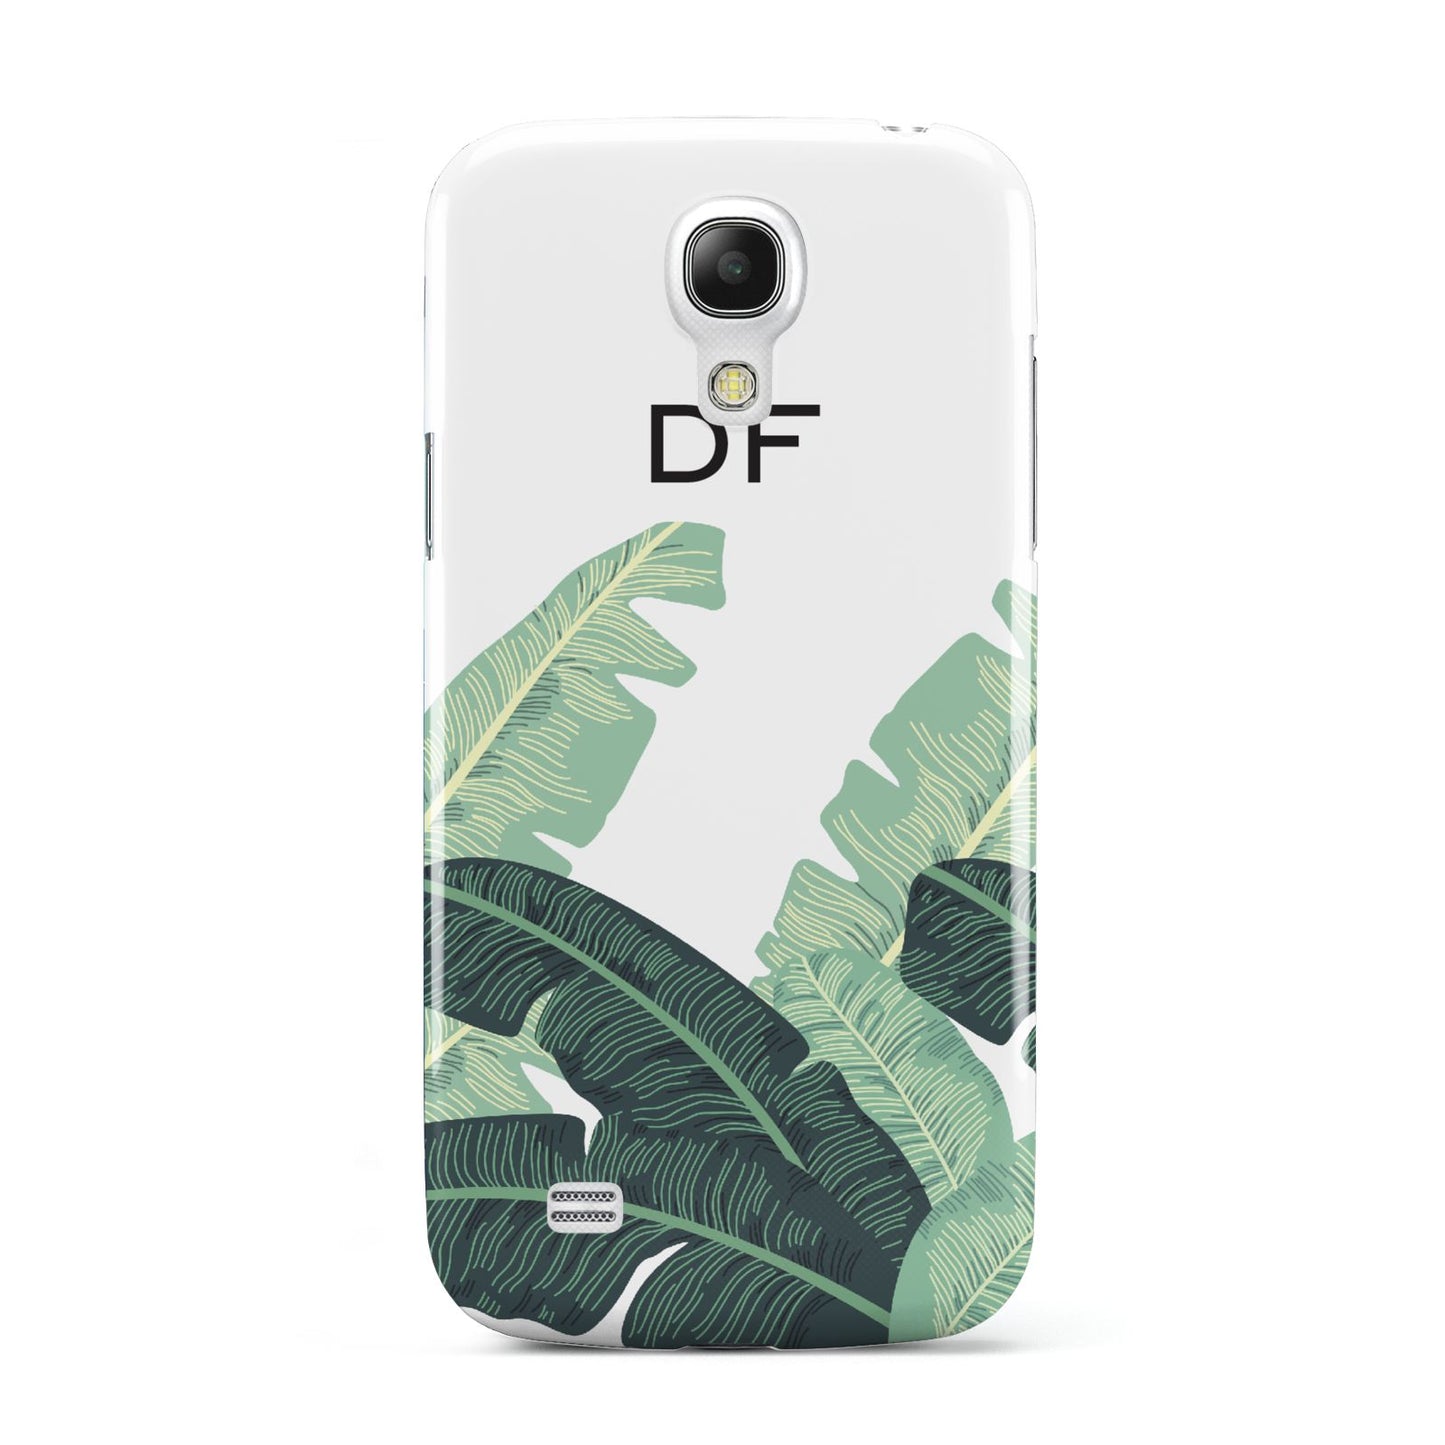 Personalised White Banana Leaf Samsung Galaxy S4 Mini Case